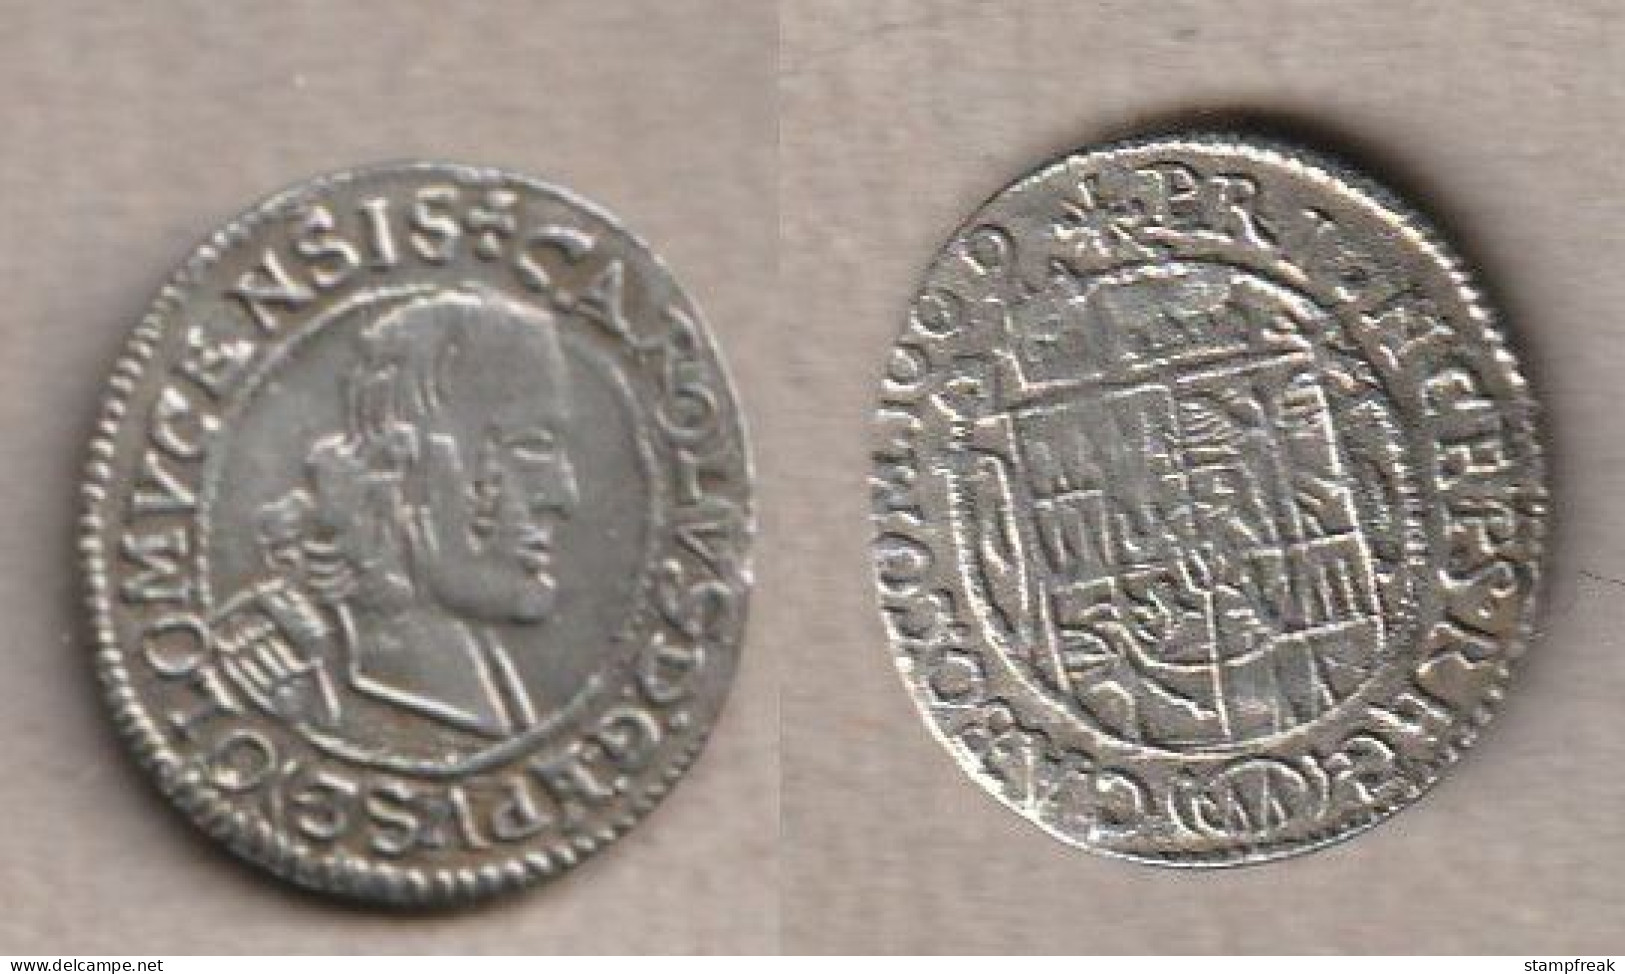 6767) RDR, Bistum Olmütz, 3 Kreuzer 1669 - Tsjechië